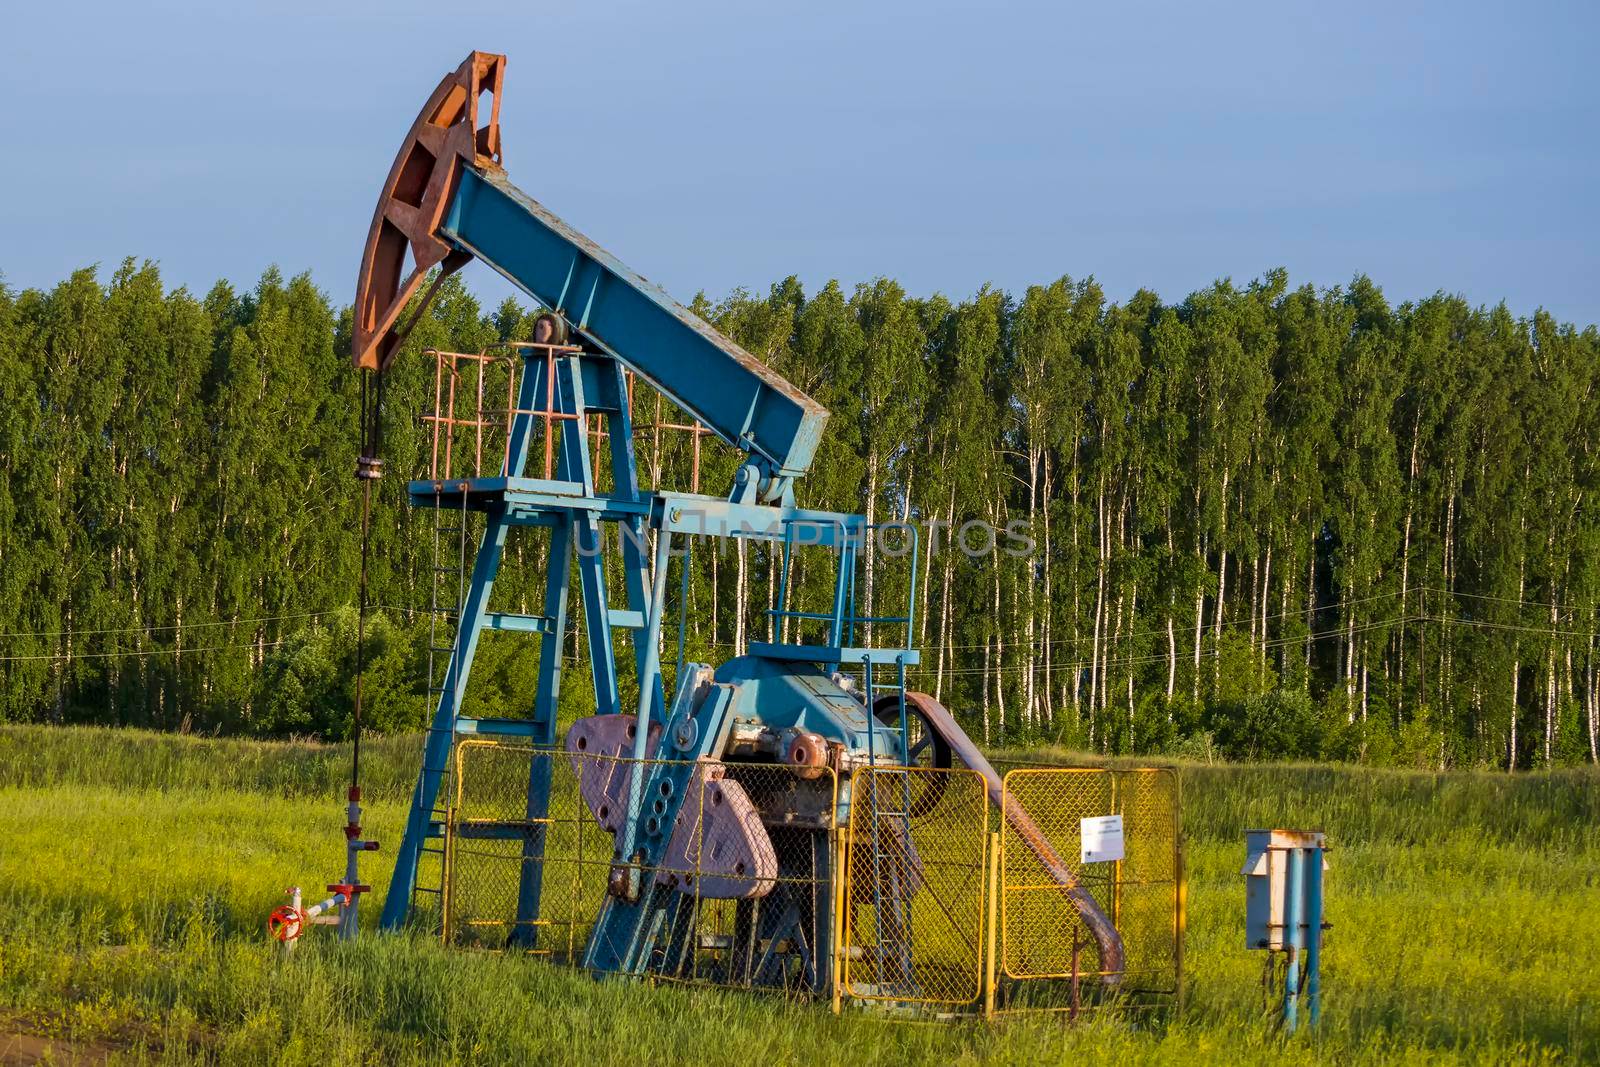 Working oil pump from oil field. Industrial equipment. Bashkortostan, Russia - 12 June, 2021. by Essffes